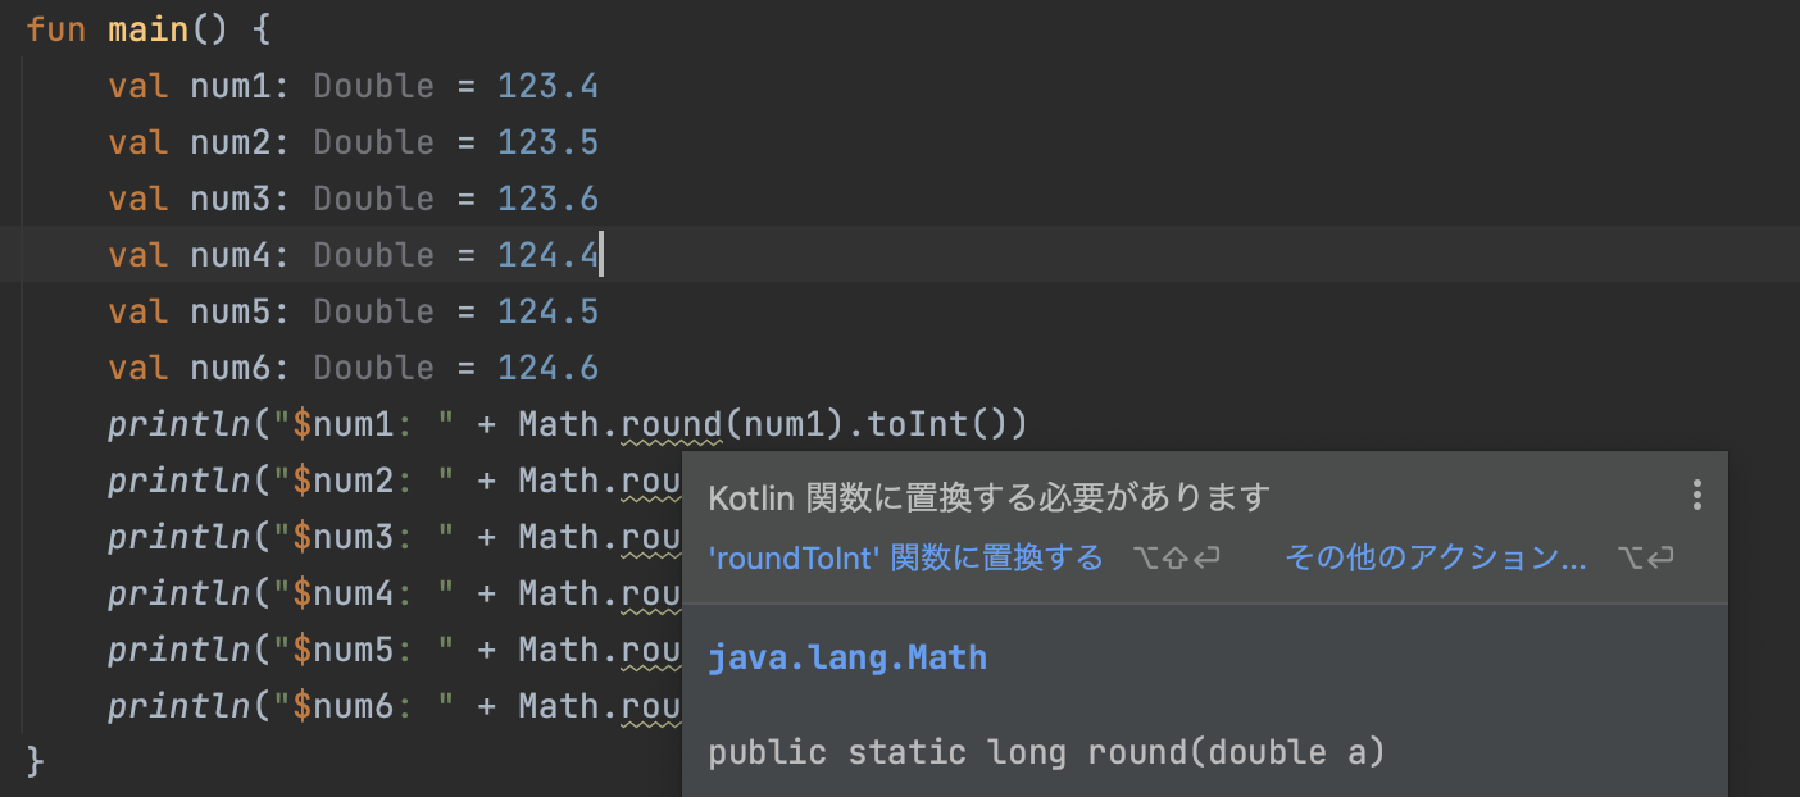 roundToInt() は、内部的にはJavaの Math.round() が呼ばれている